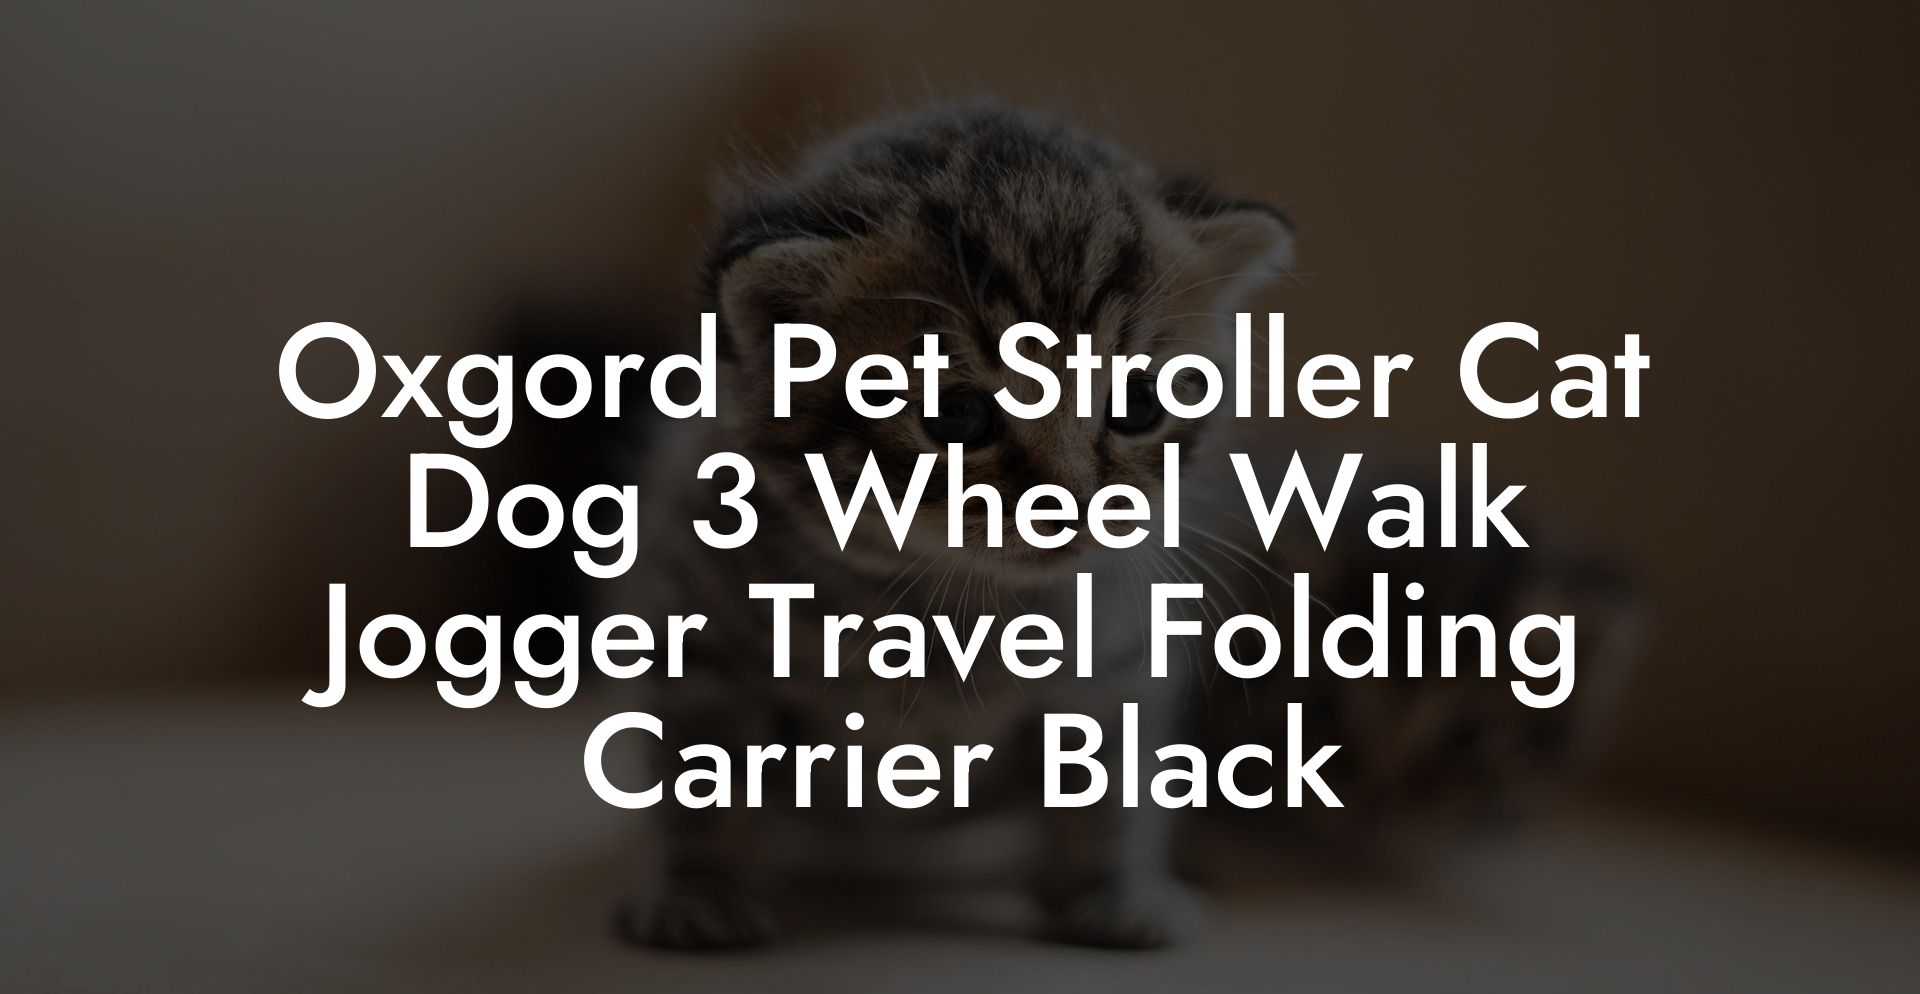 Oxgord Pet Stroller Cat Dog 3 Wheel Walk Jogger Travel Folding Carrier Black